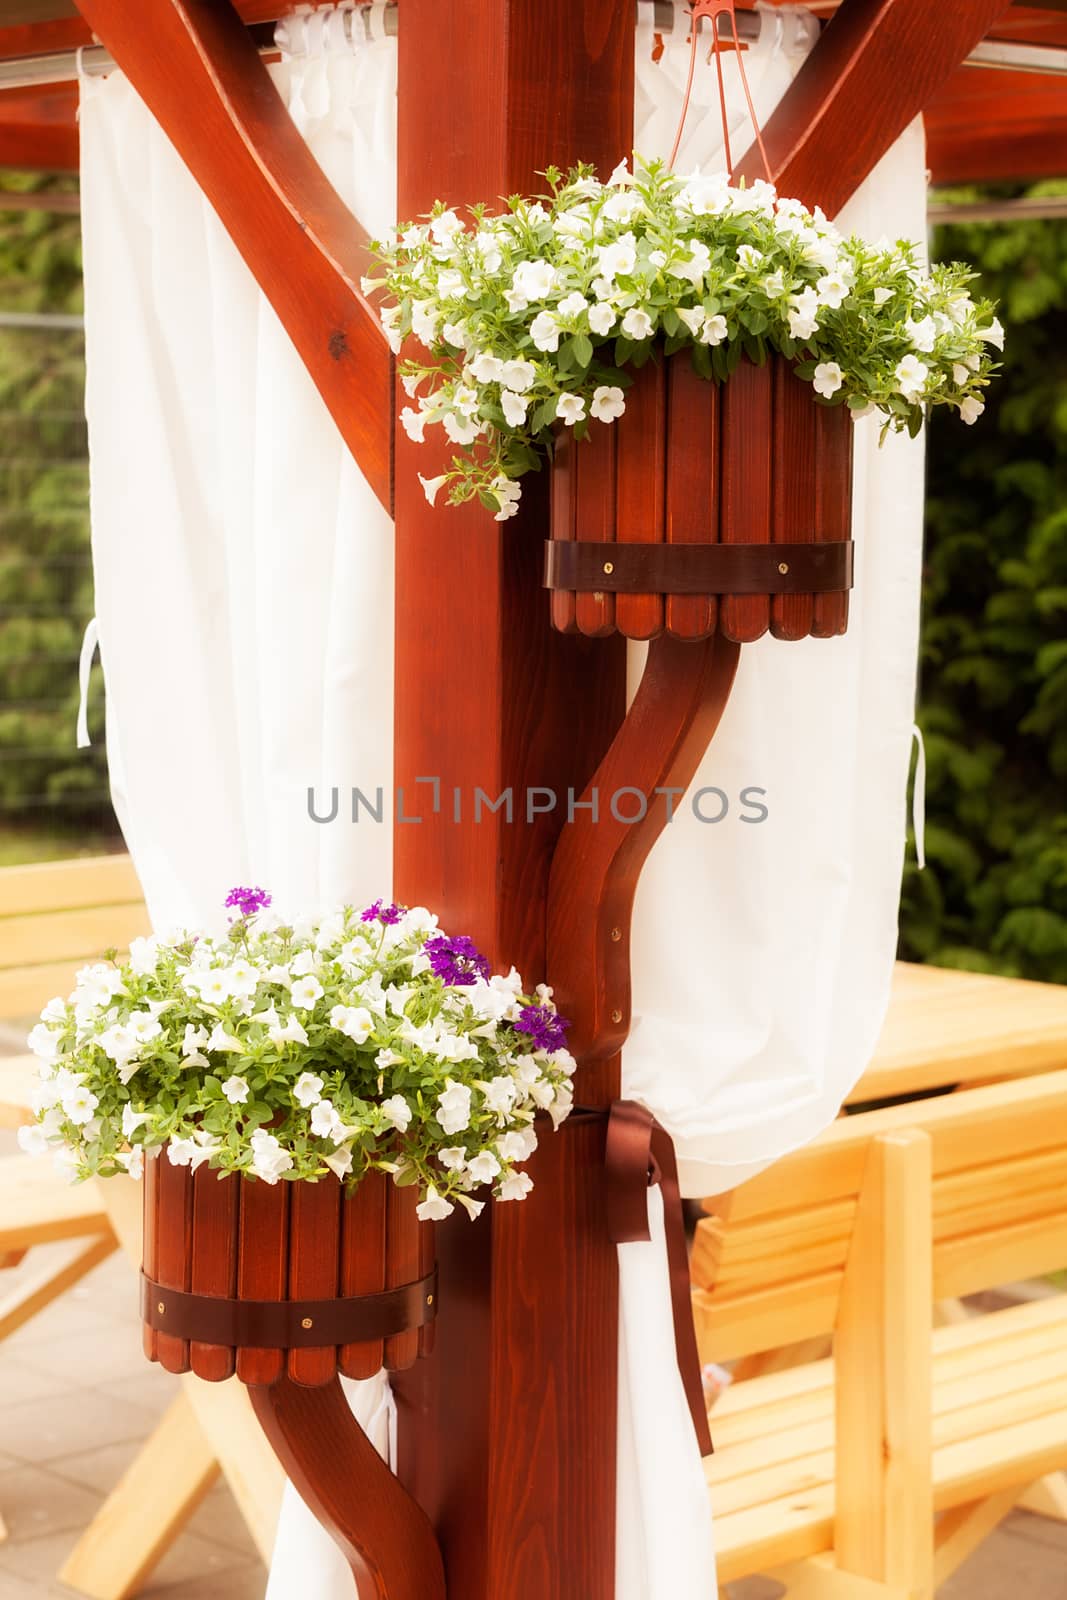 decorative wooden flower boxes by vladimirnenezic